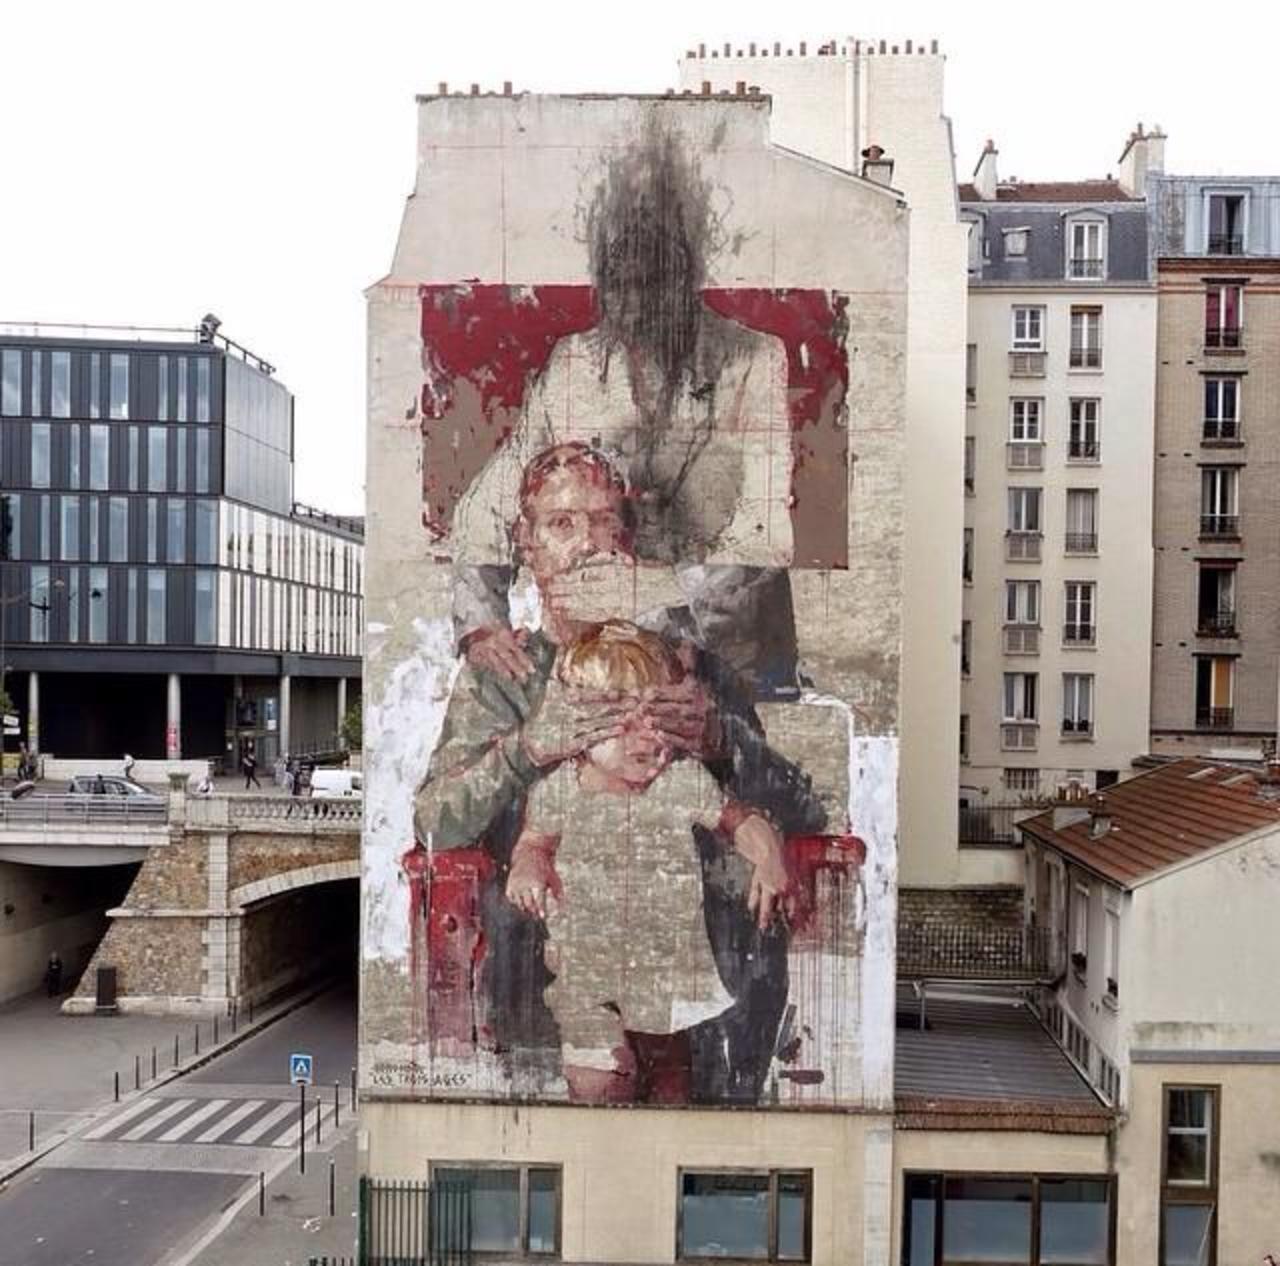 RT "@GoogleStreetArt: New large scale Street Art by Borondo in Paris, France. 
#art #mural #graffiti #streetart http://t.co/a6OvCpYNoA"”